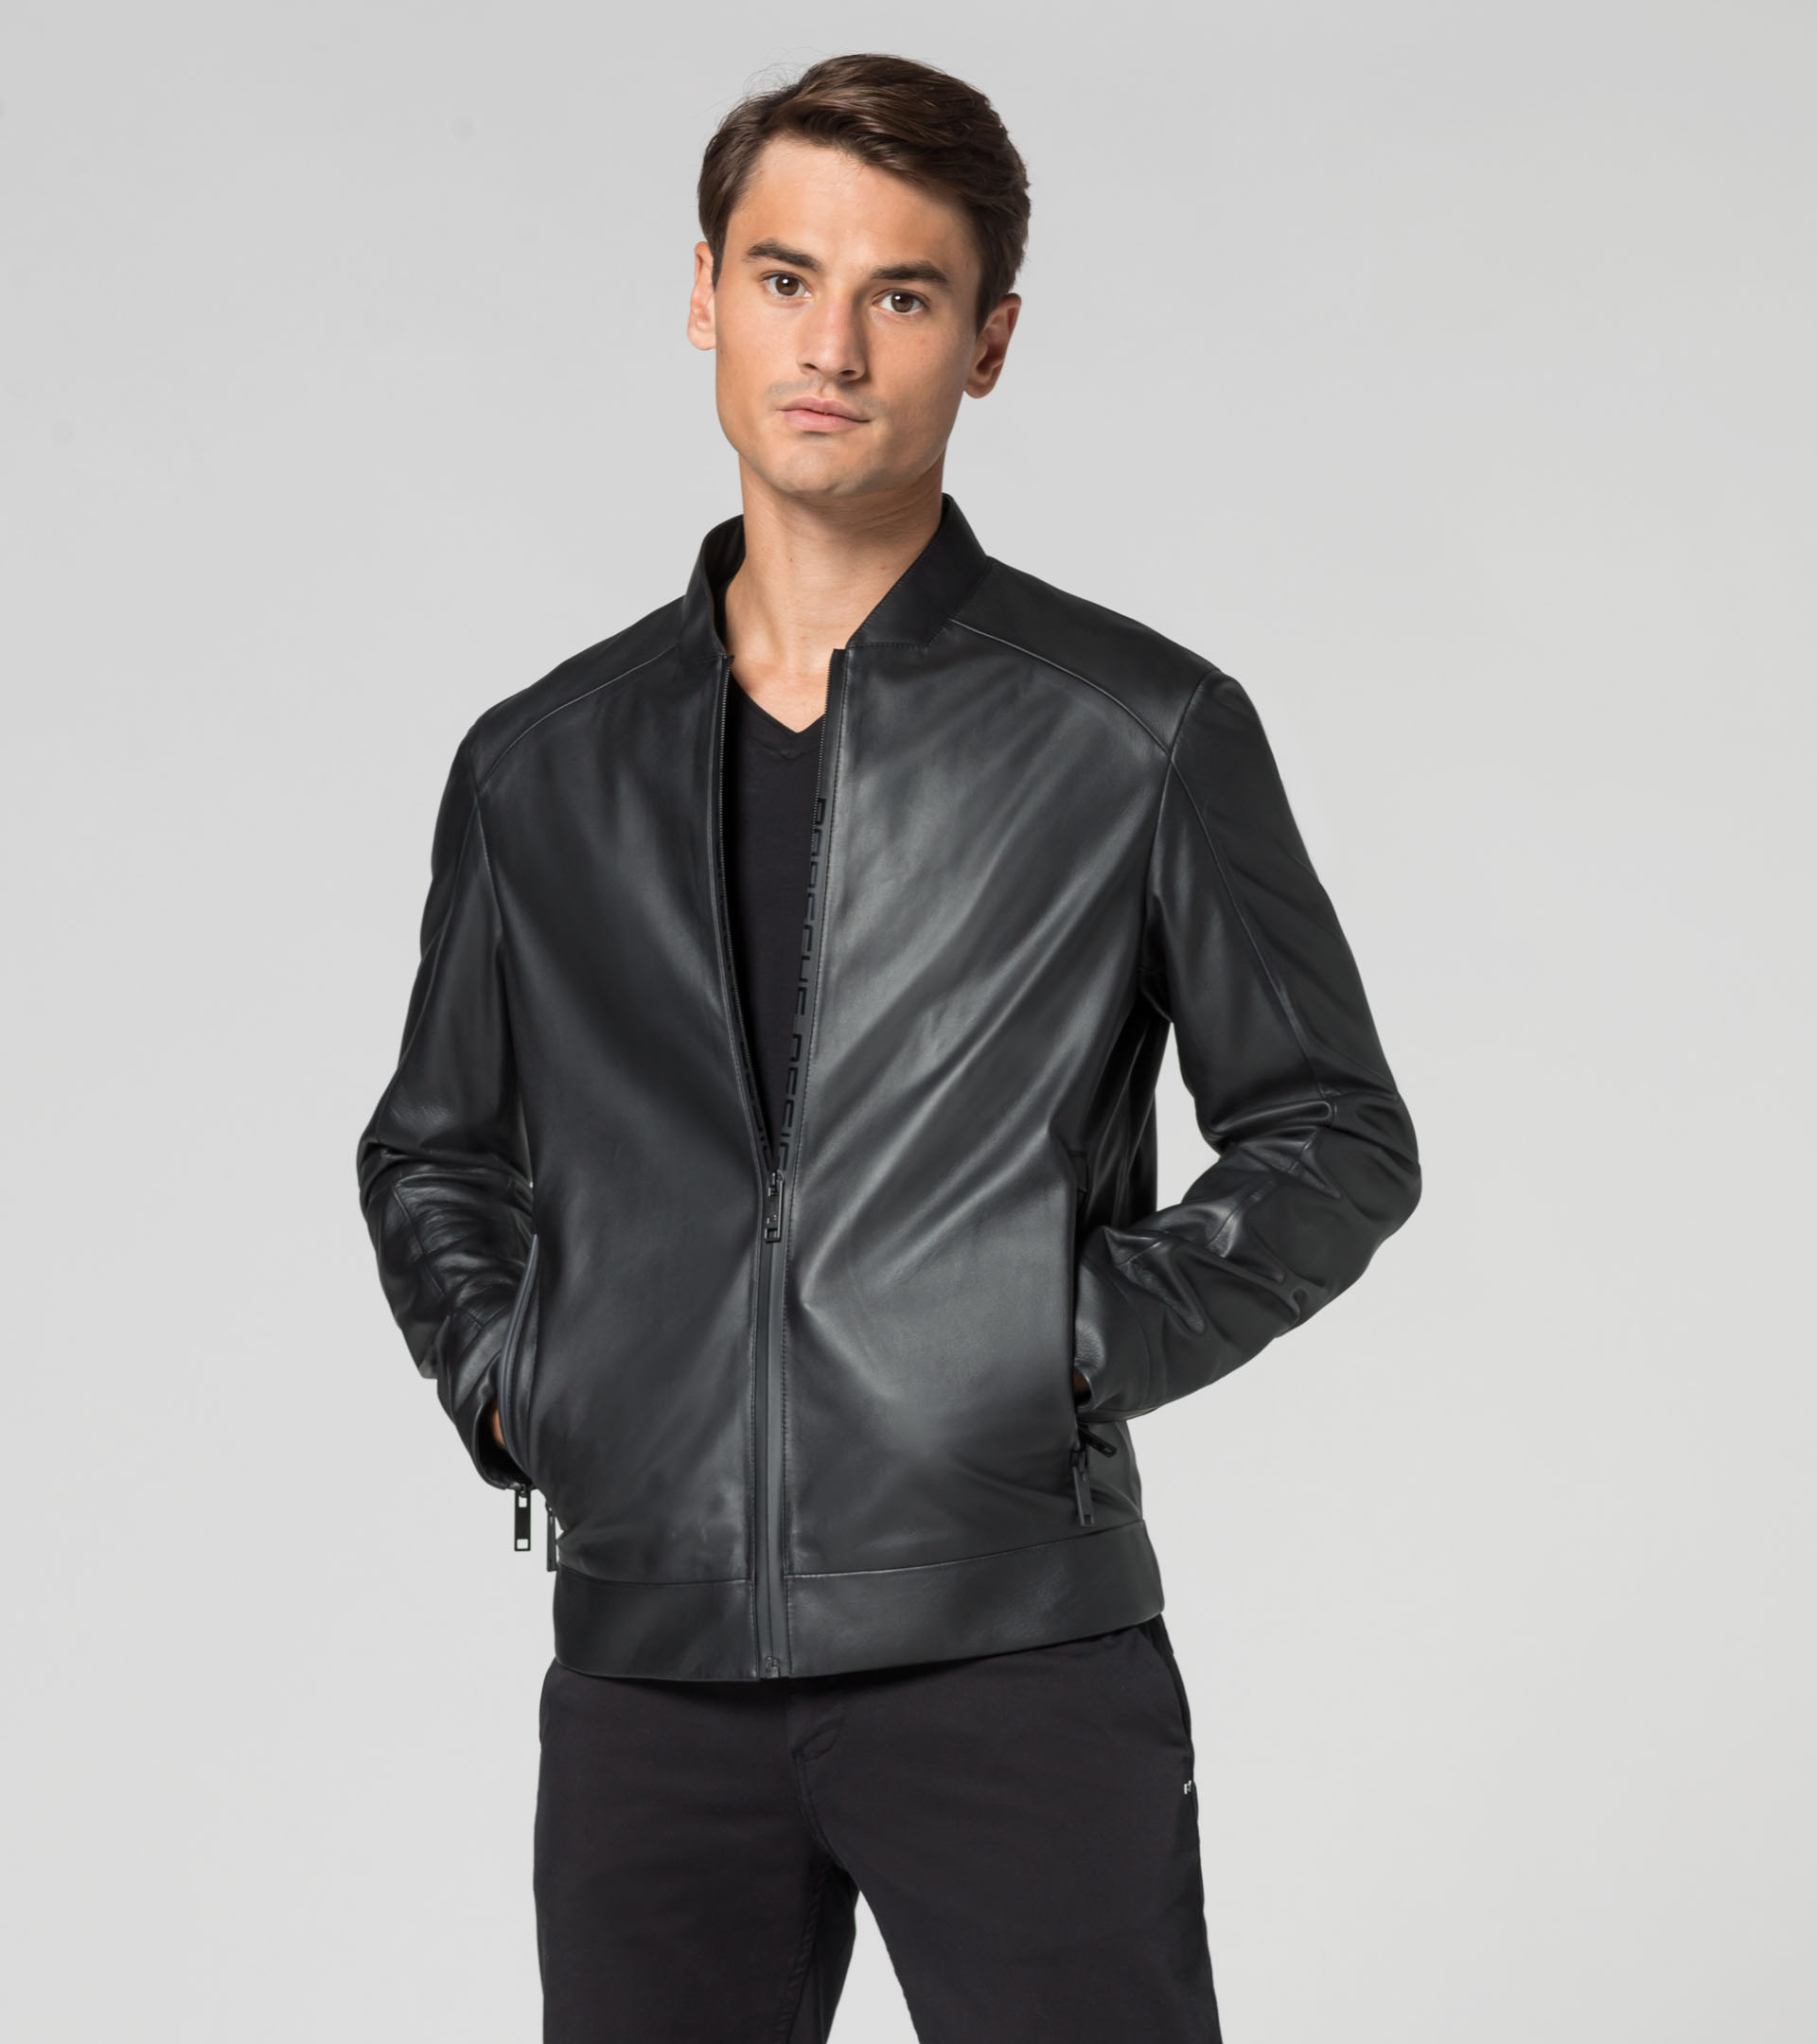 Active Leather Jacket - Exclusive Leather Jackets for Men | Porsche ...